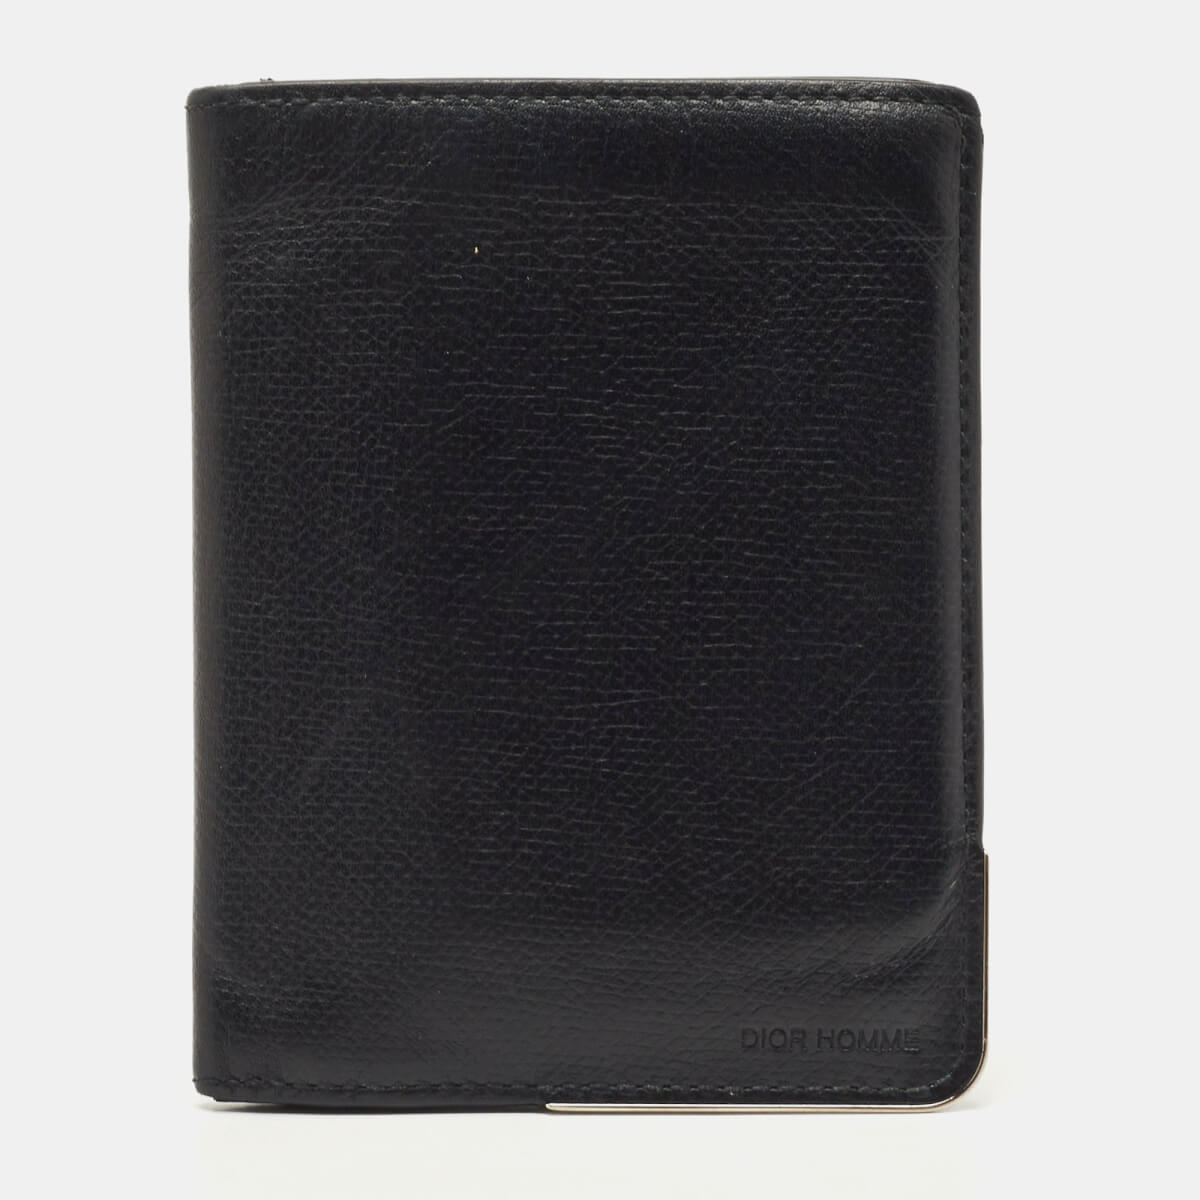 Dior Homme Black Leather Bifold Wallet